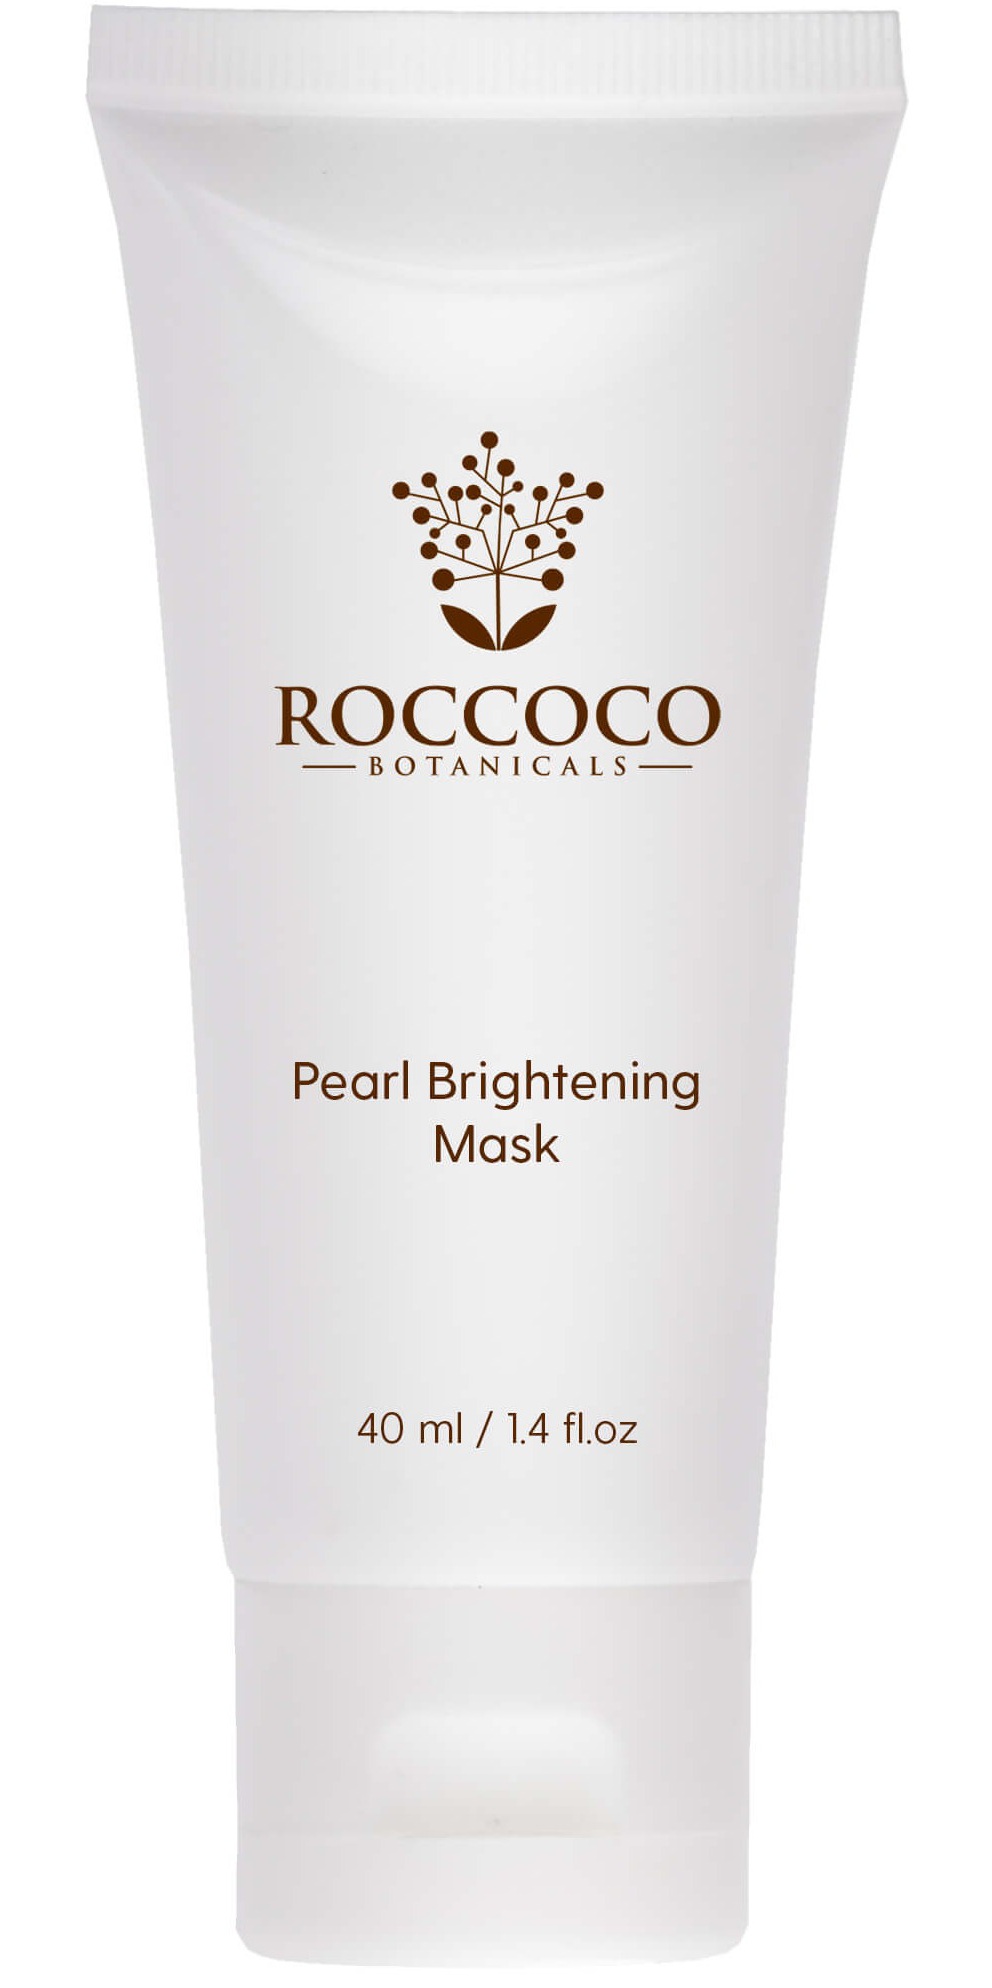 Roccoco Botanicals Pearl Brightening Mask